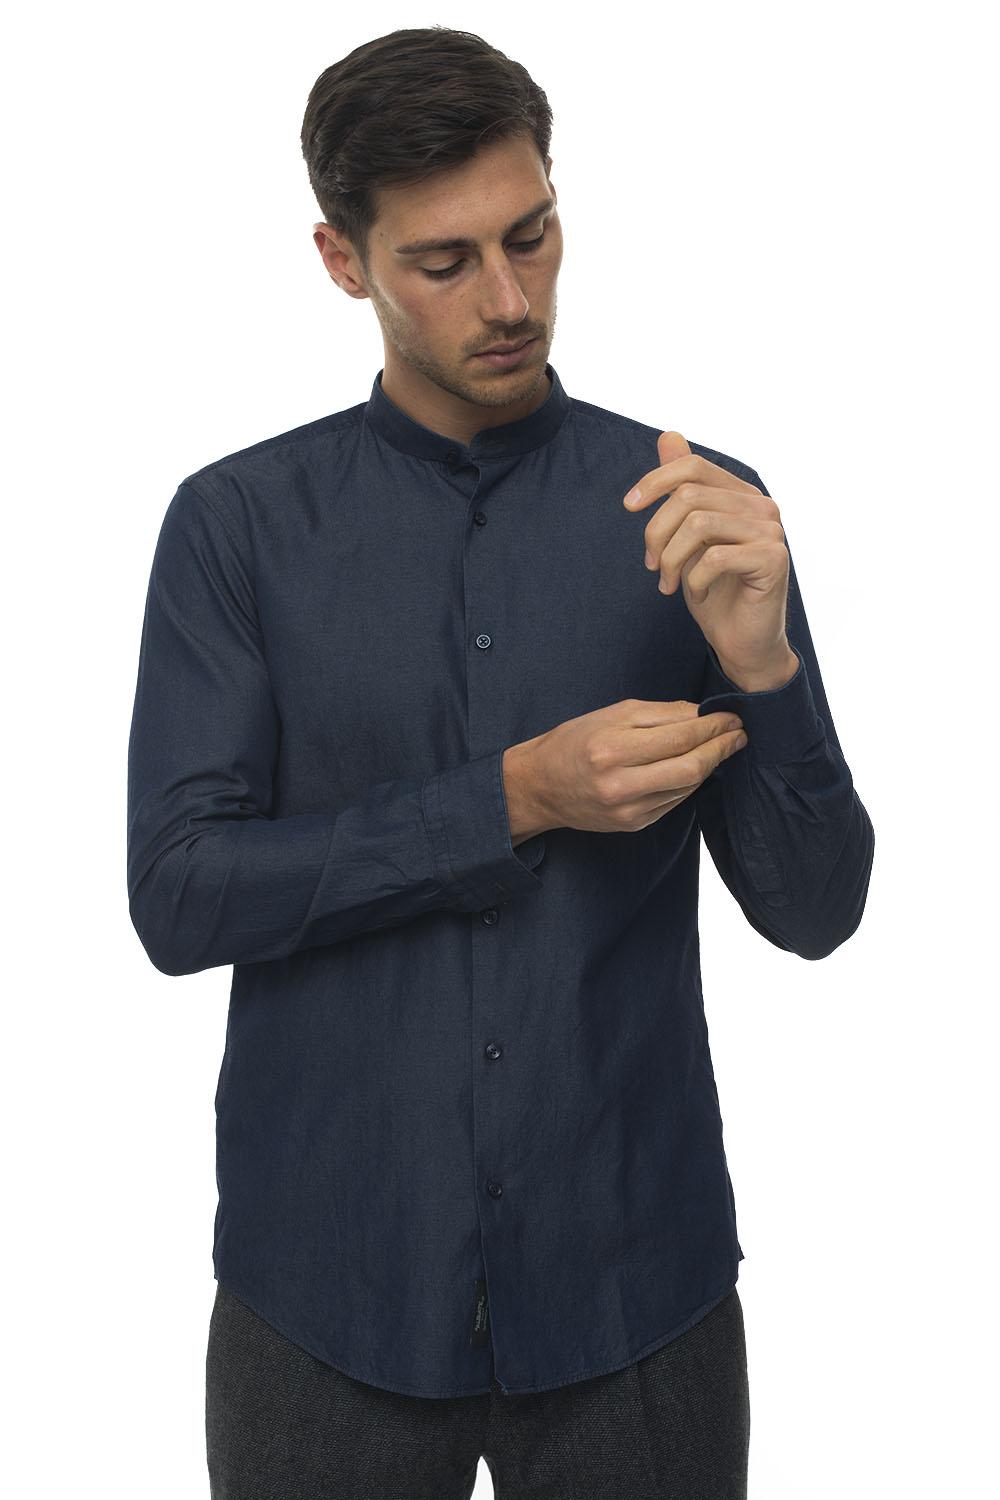 BOSS by Hugo Boss Casual Shirt Dark Denim Cotton in Blue for Men - Lyst